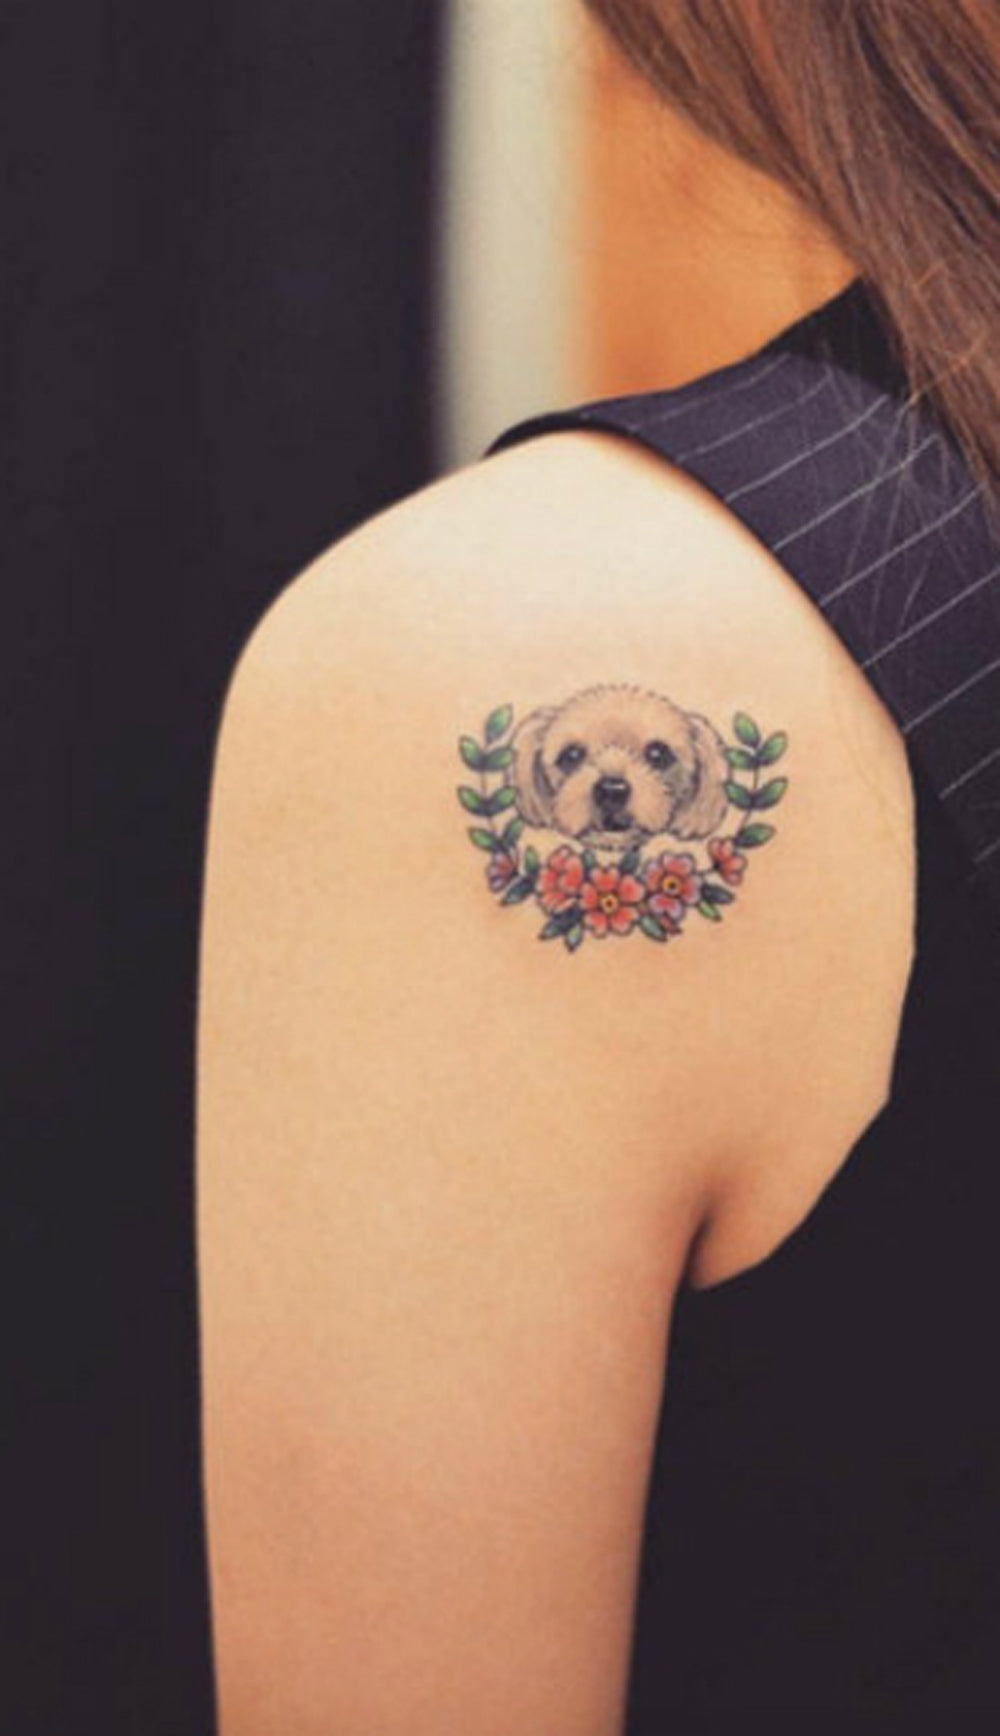 Memorial Dog Flower Wreath Back of Shoulder Tattoo Ideas for Women -  ideas de tatuaje de hombro de perro - www.MyBodiArt.com 